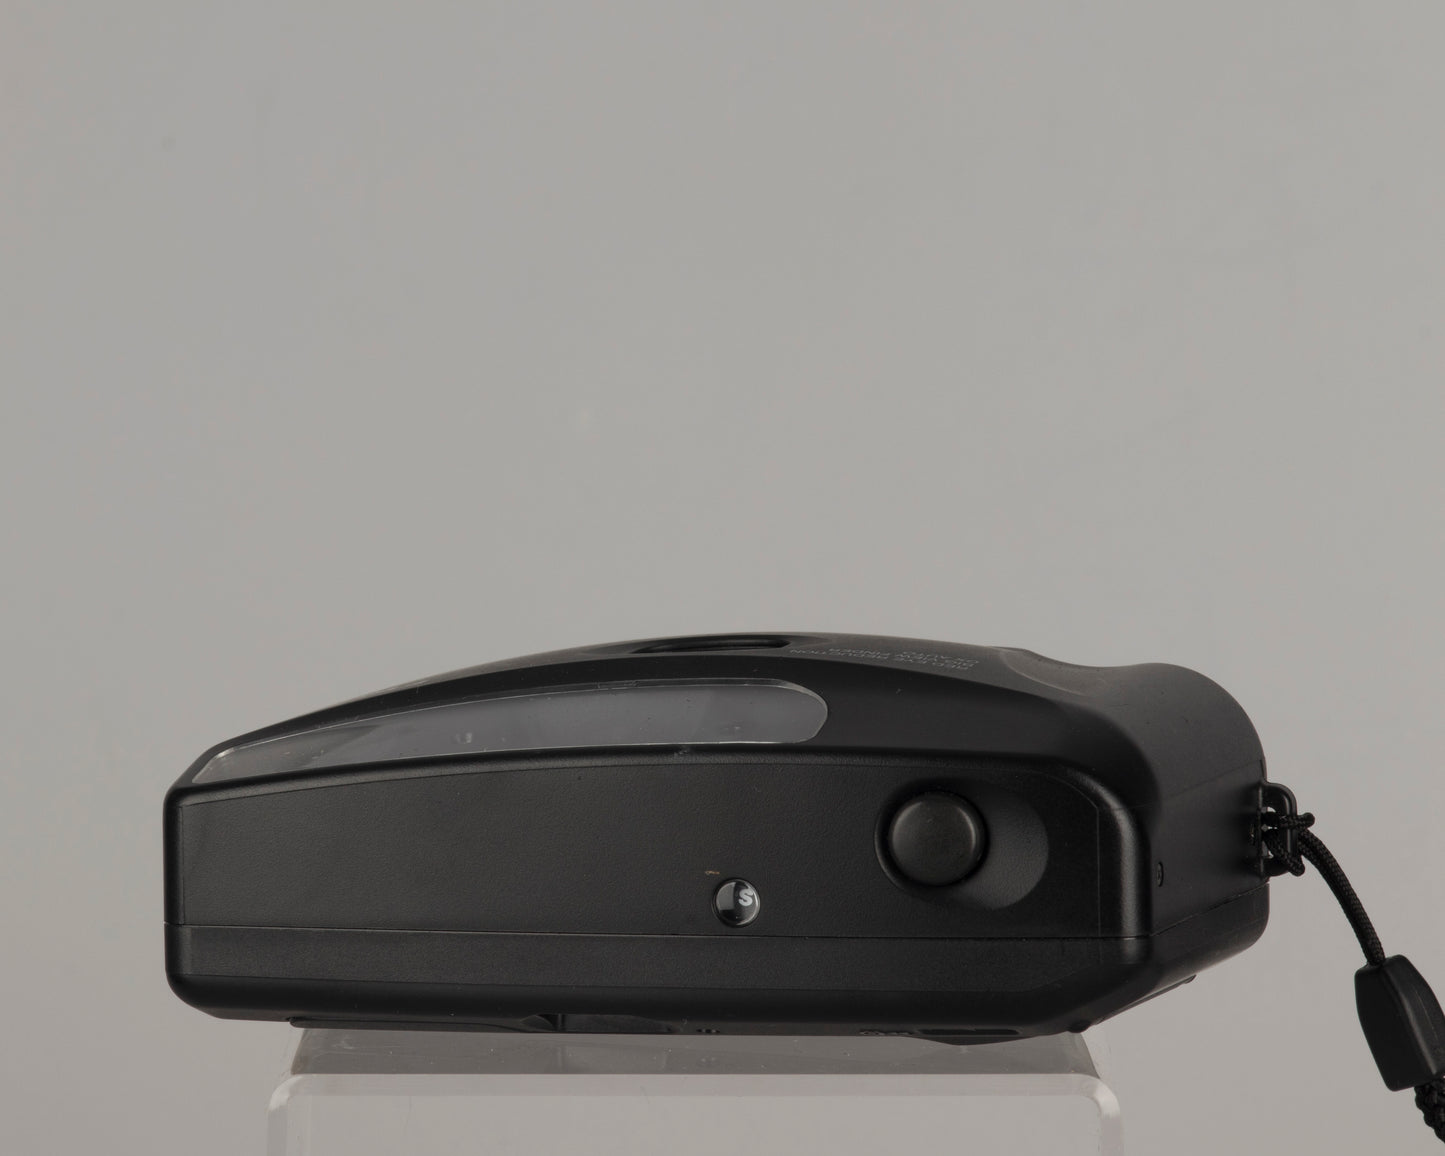 Minolta F10BF 35mm film camera with case (serial 34830119)